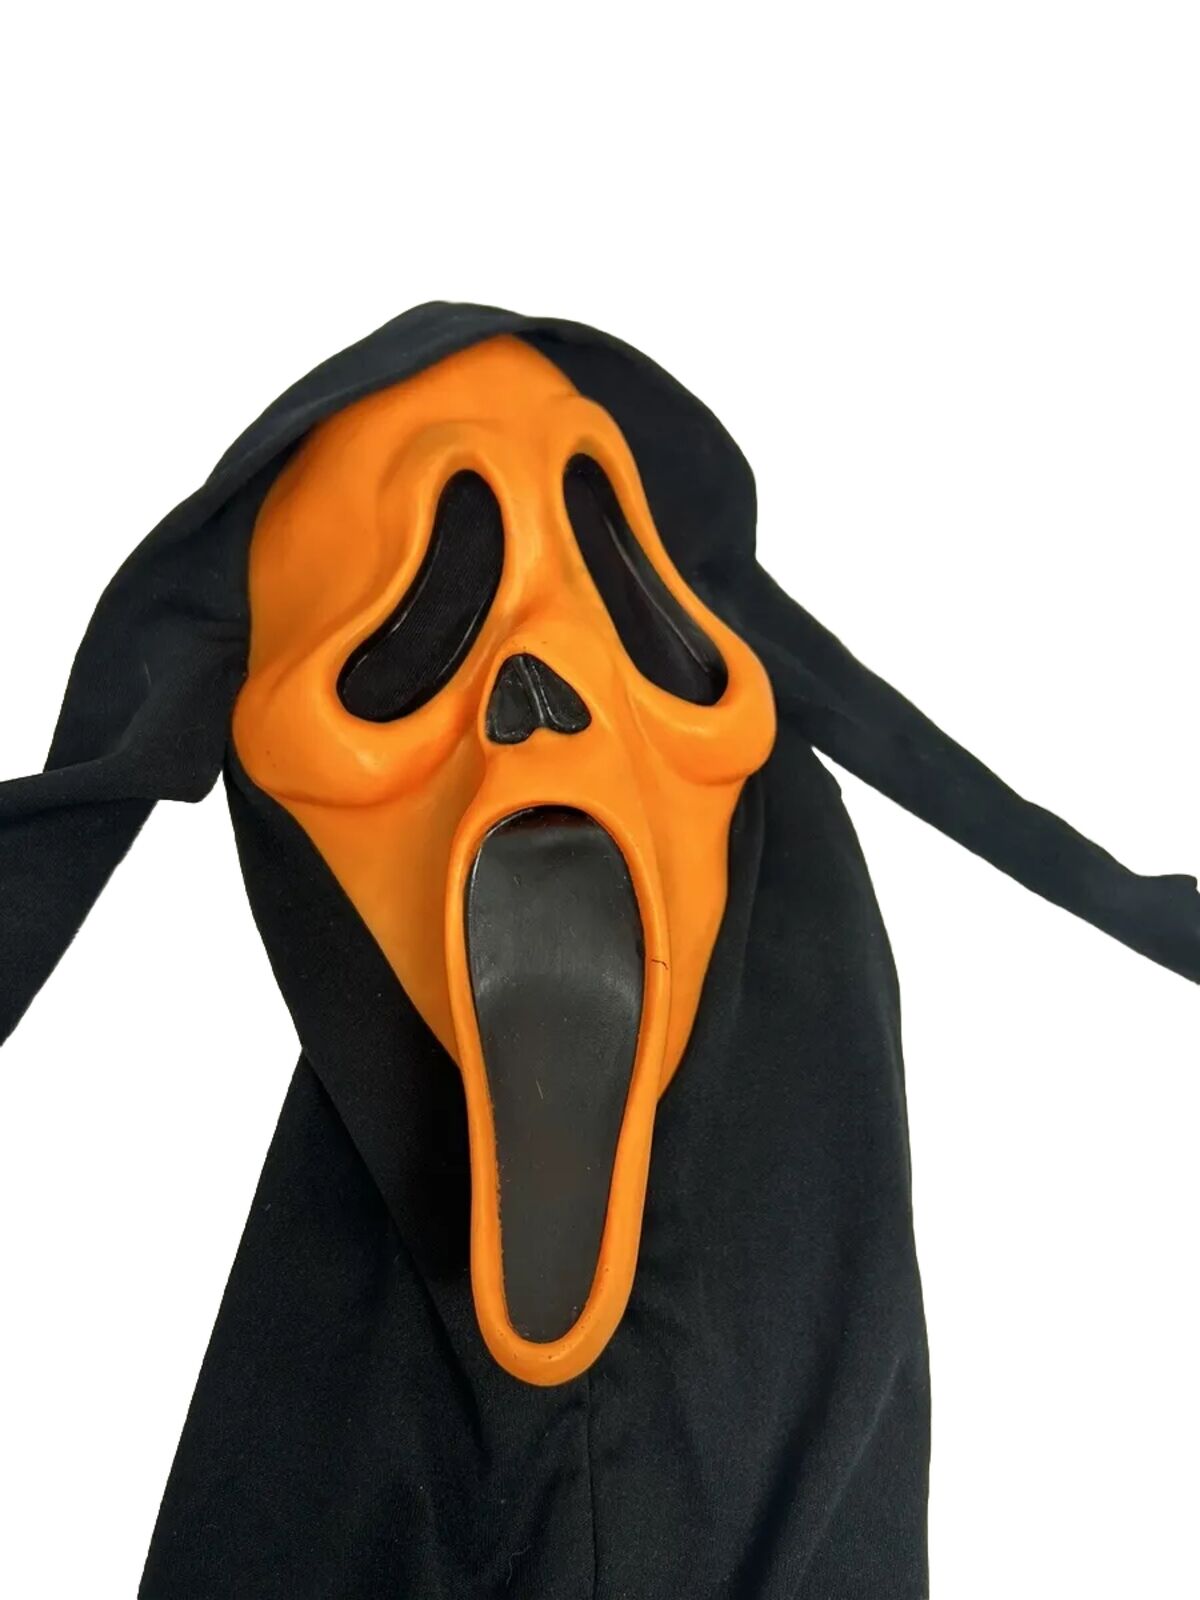 Vintage Easter Unlimited Orange Halloween GhostFace Mask-Scream-Fun World-Rare